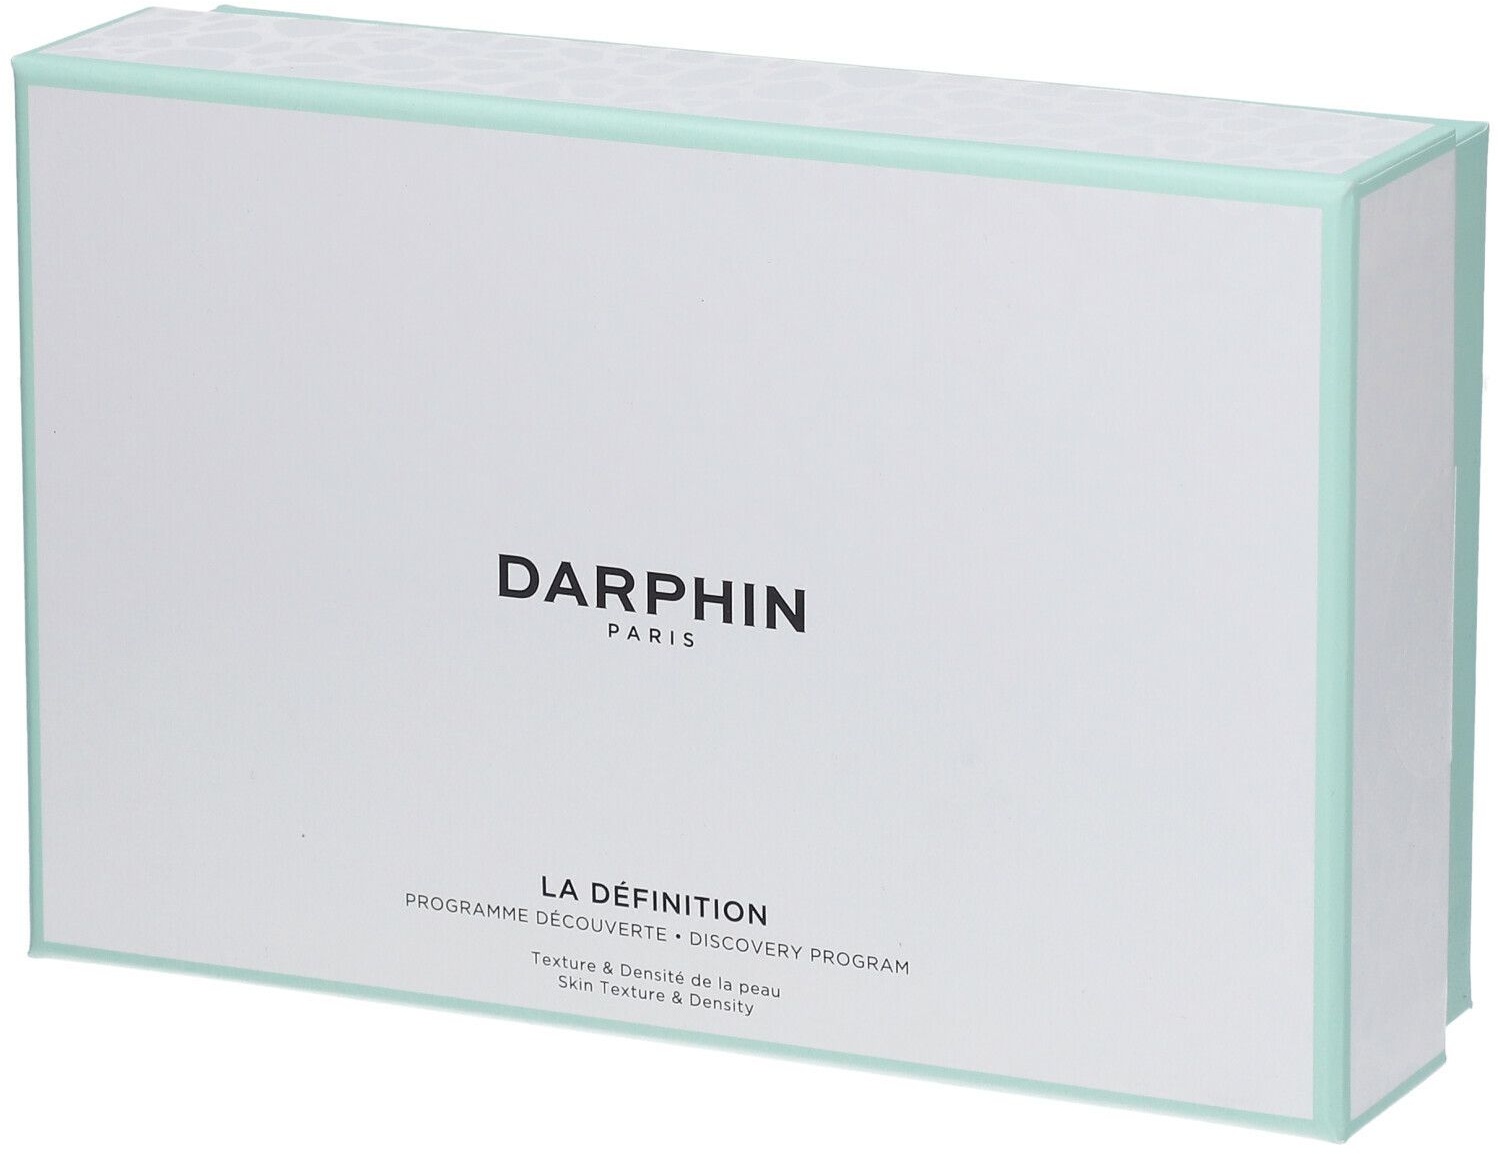 DARPHIN La Définition Discovery Program 1 pc(s) emballage(s) combi